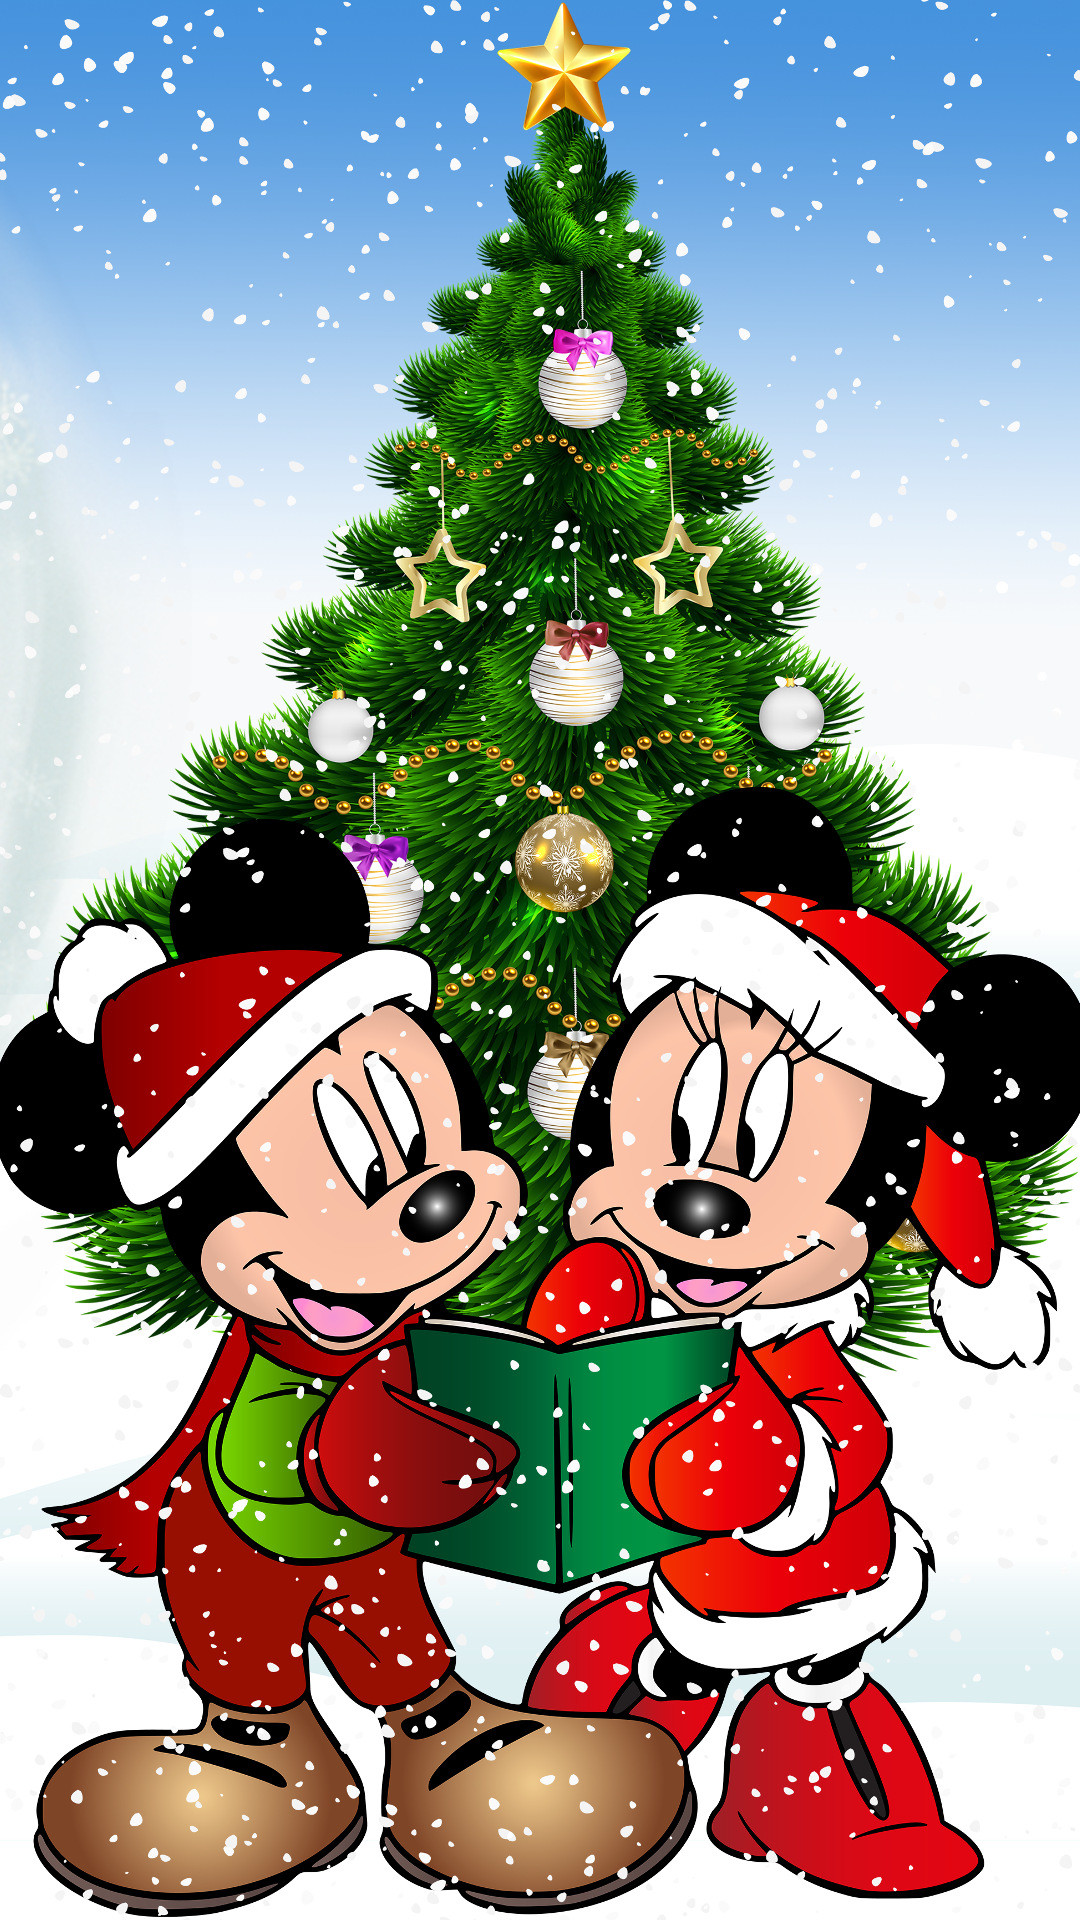 1080x1920 Mickey Mouse Christmas wallpaper HD Mobile 1080Ã1920 iPhone 8 Plus